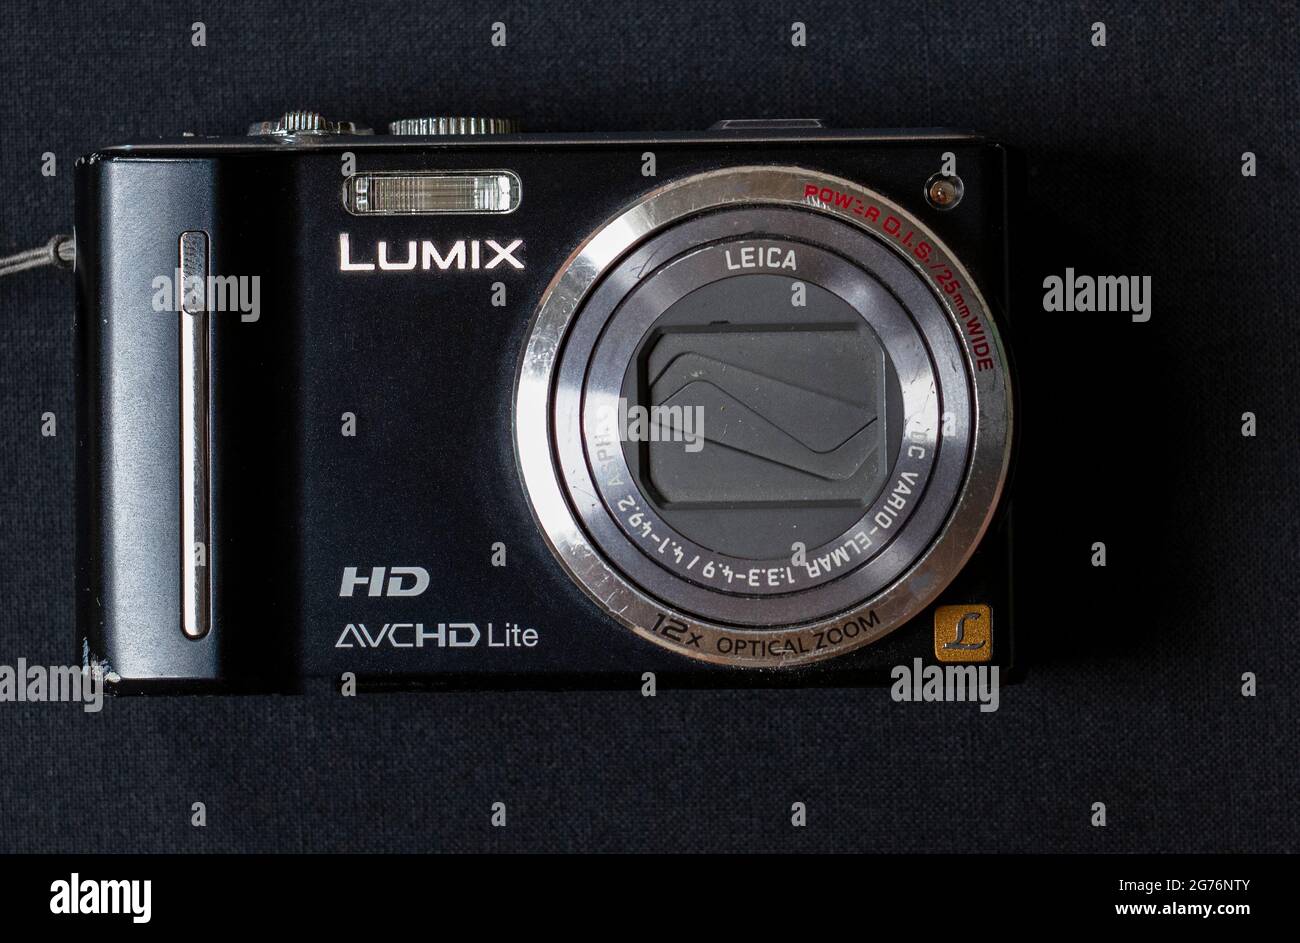 Panasonic Lumix HD AVCHD Lite digital compact camera with Leitz Leica  Vario-Elmar lens Stock Photo - Alamy